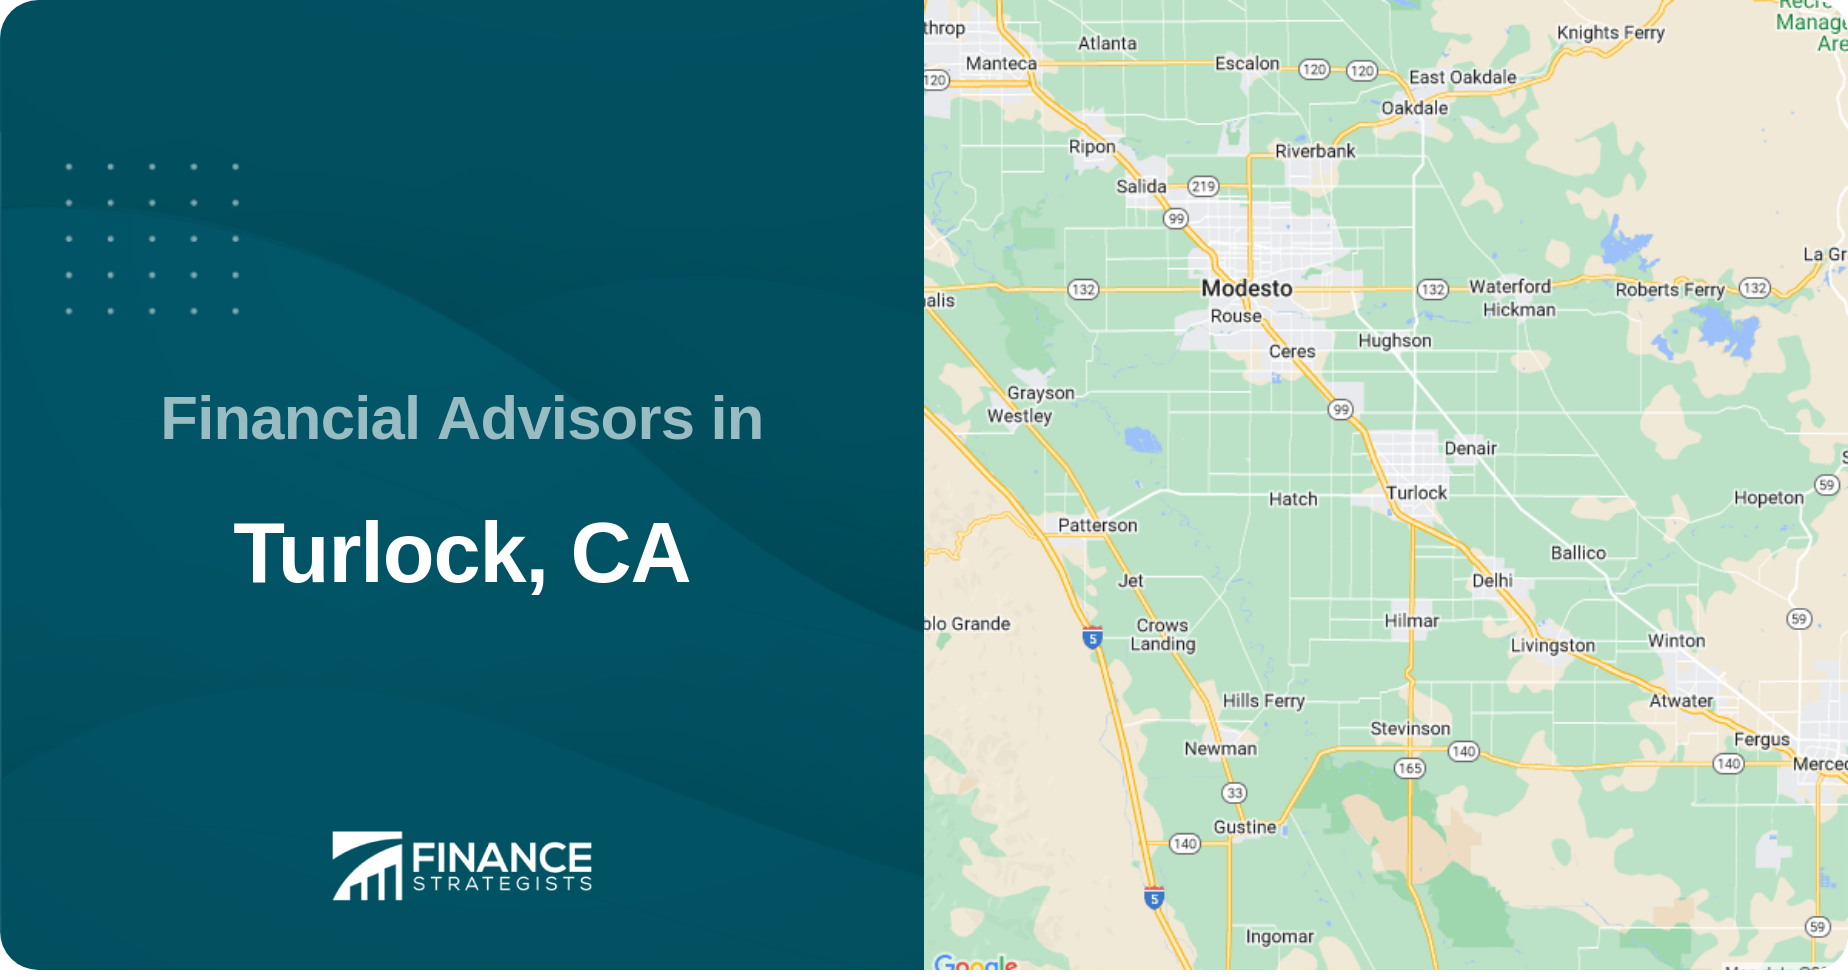 Financial Advisors in Turlock, CA